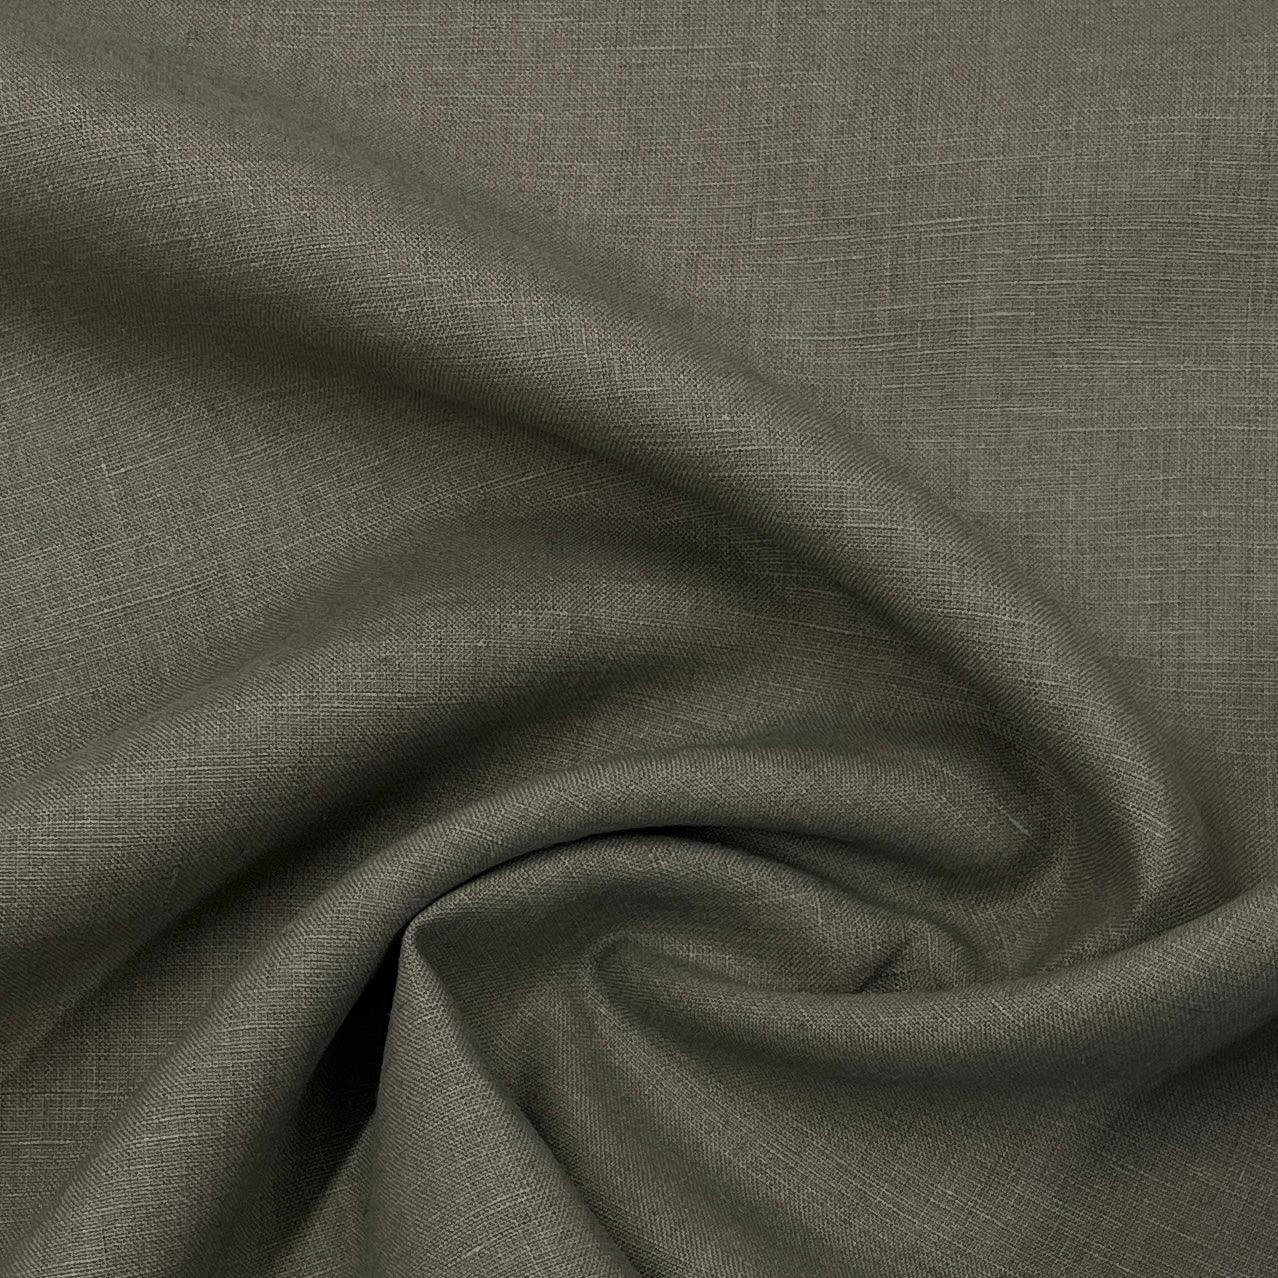 Desert Taupe Linen Woven Fabric - 200 GSM - Nature's Fabrics